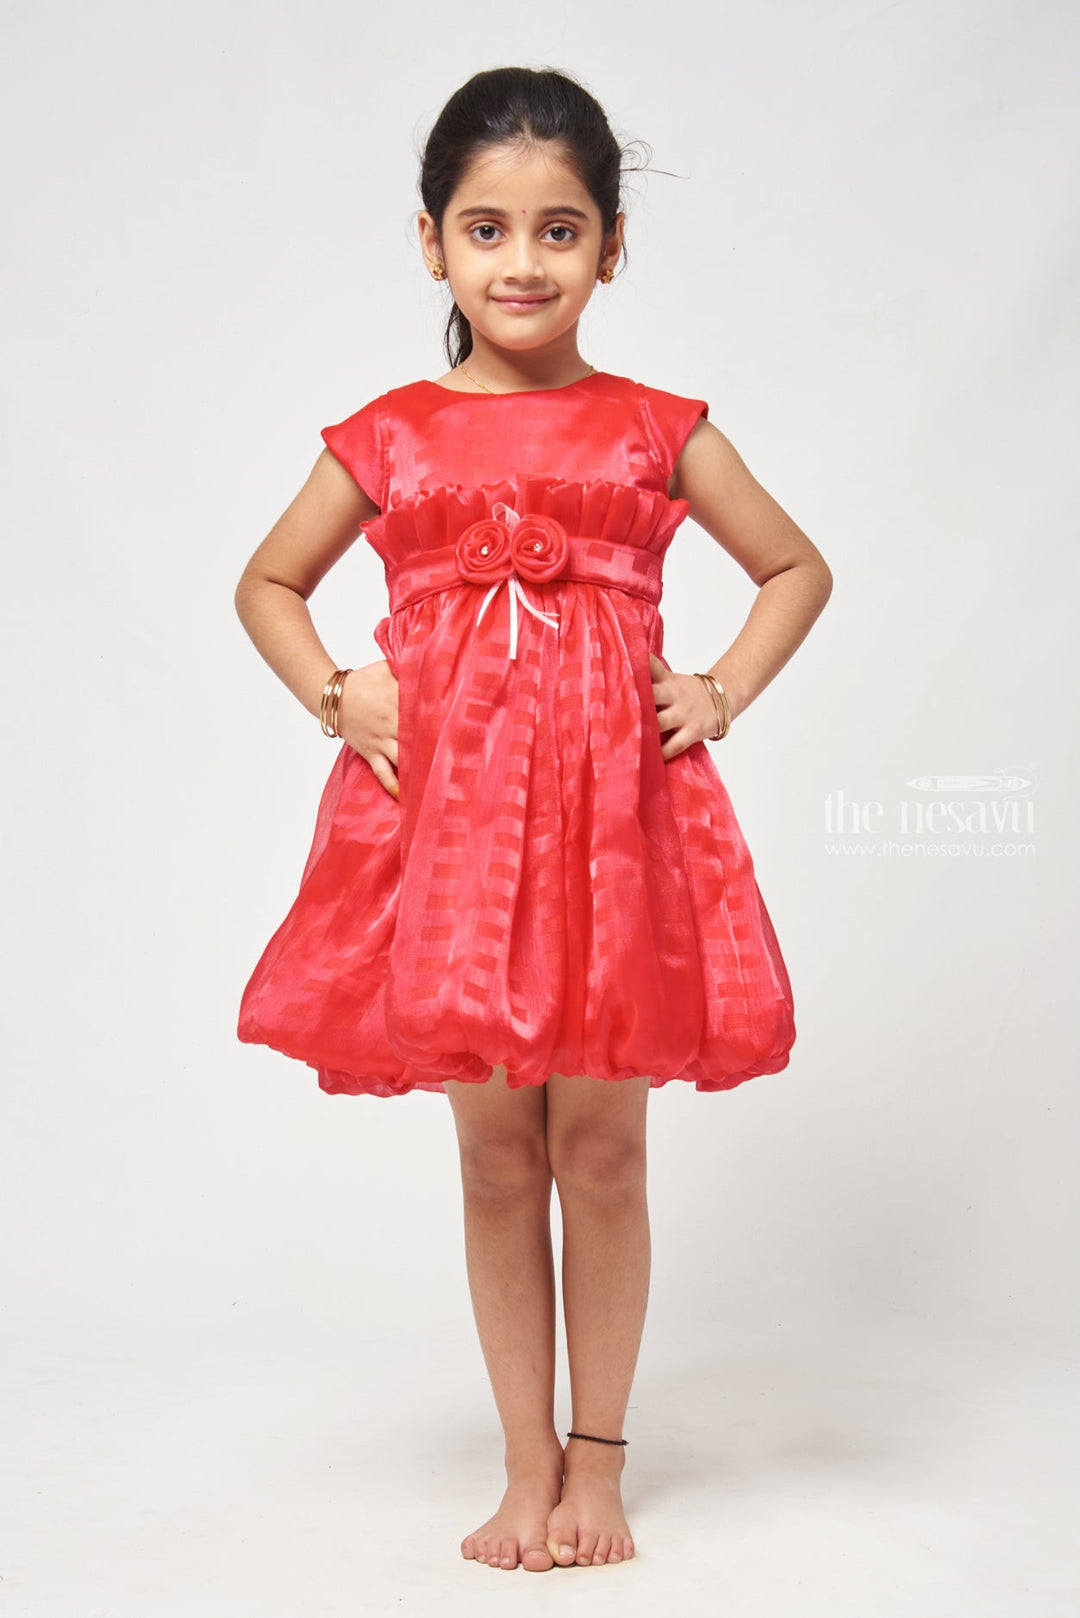 The Nesavu Girls Fancy Frock Elegant Chiffon Dress Sleeveless Elegance with Draped Detailing Nesavu 16 (1Y) / Red / Organza GFC1122B-16 Chic A-line Birthday Dress For Kids - Perfect For Photoshoots | The Nesavu